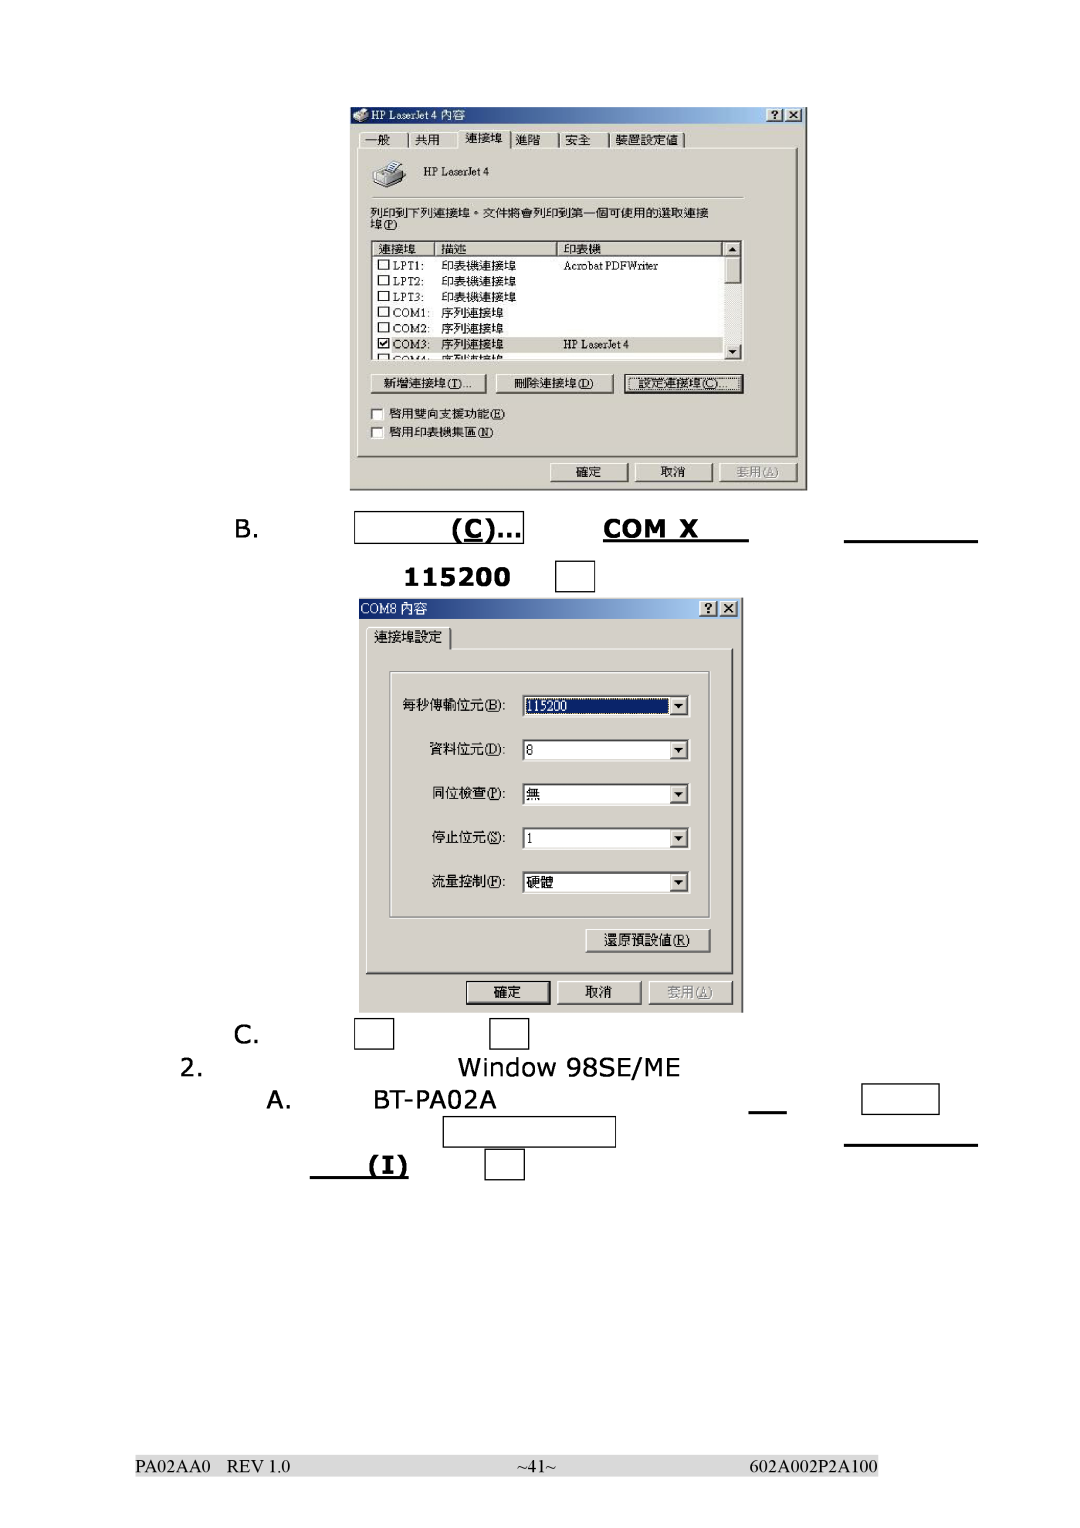 EPoX Computer manual B. C…, 115200 C 2. Window 98SE/ME A. BT-PA02A, PA02AA0 REV, ~41~, 602A002P2A100 